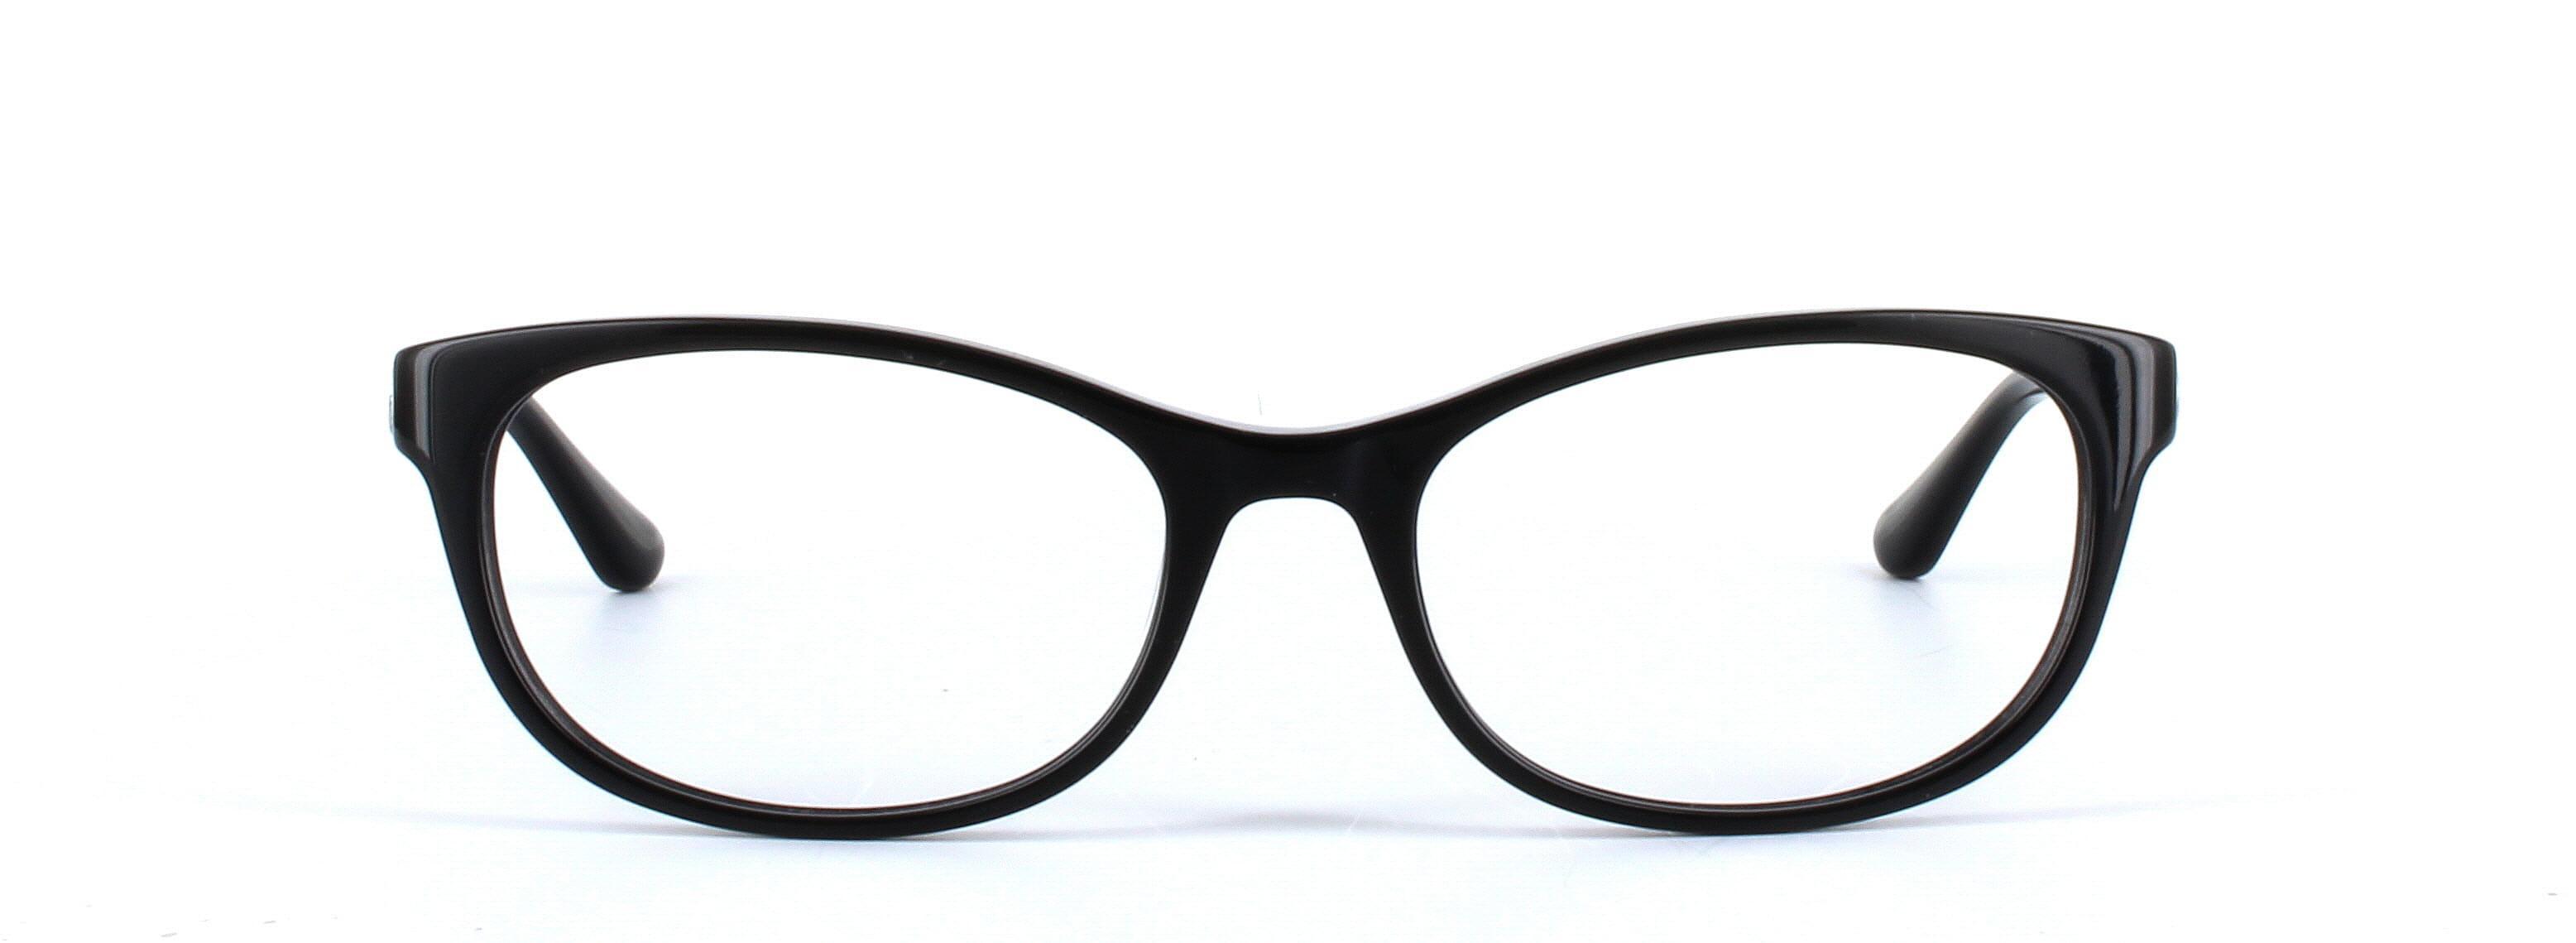 GUESS (GU2688-001) Black Full Rim Oval Acetate Glasses - Image View 5